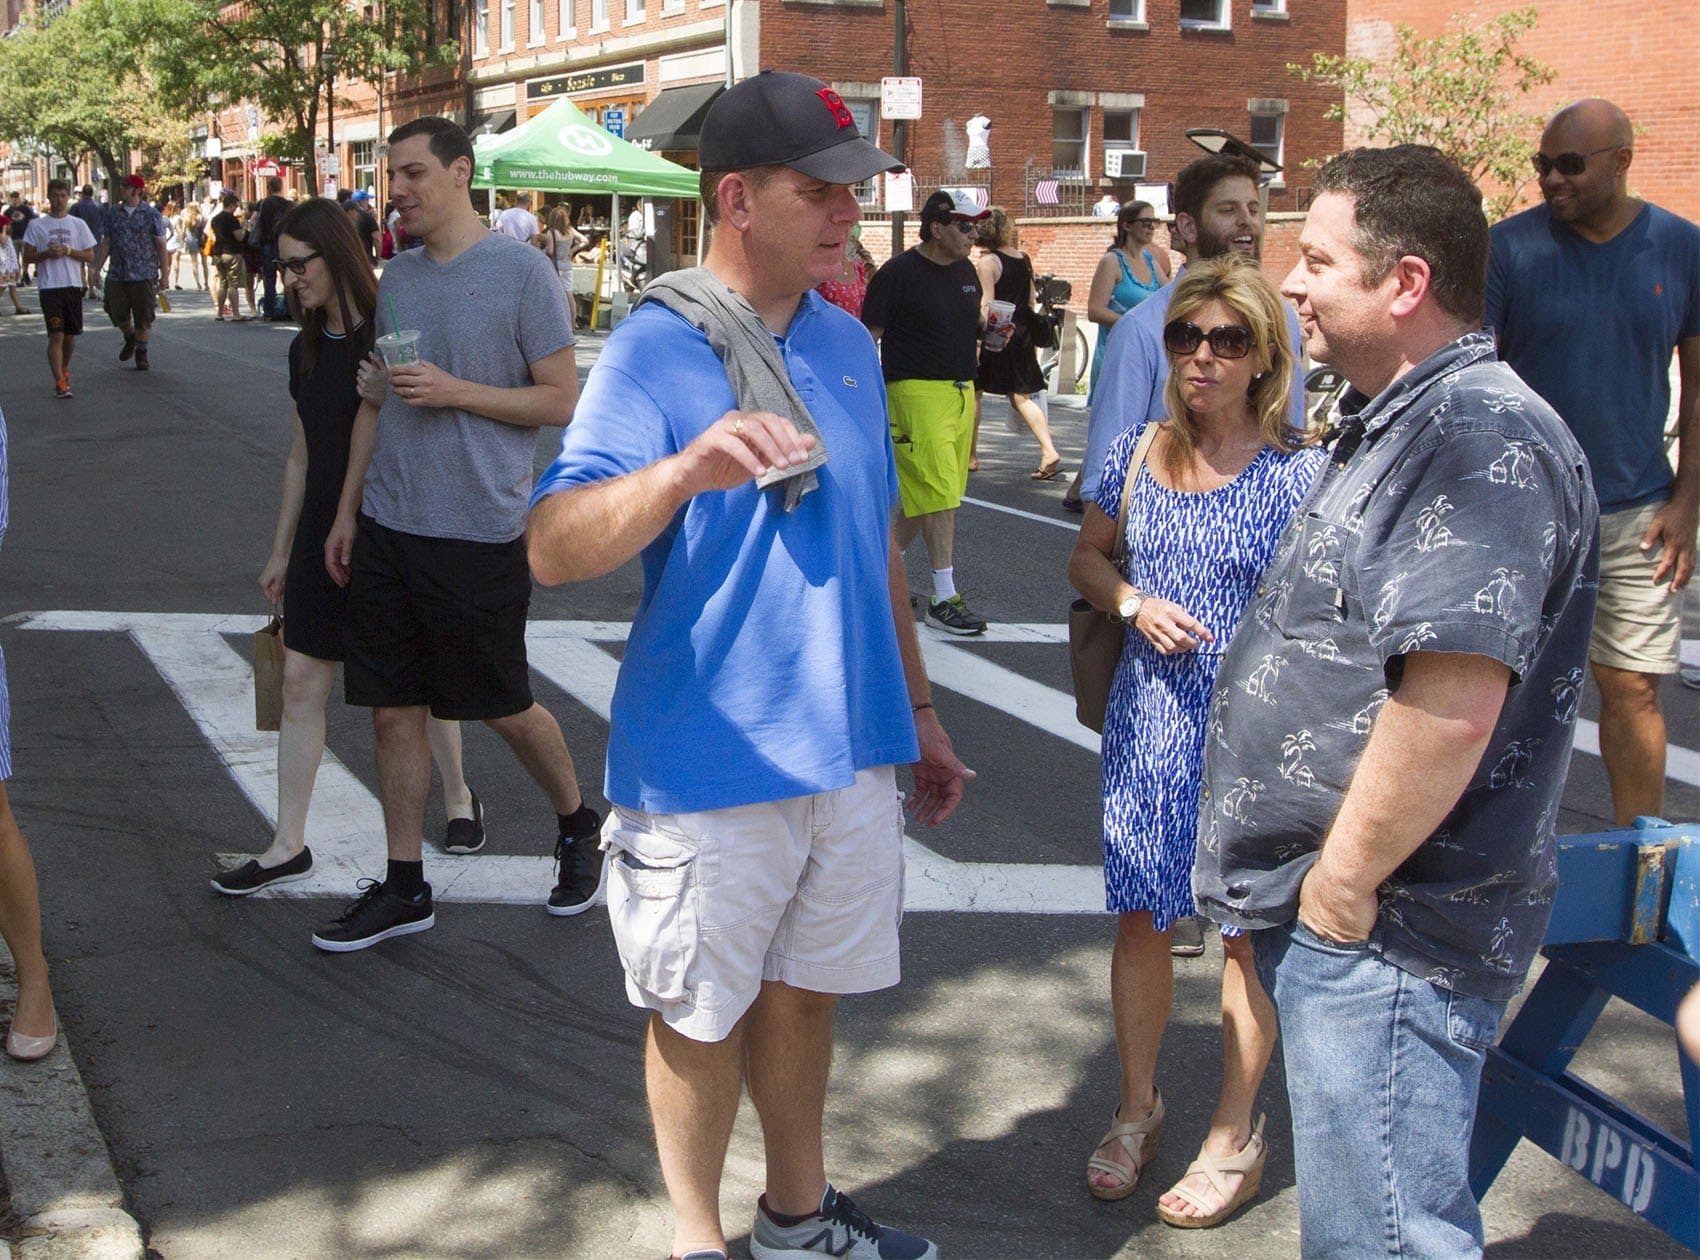 Boston Mayor Marty Walsh stopped by the Open Newbury Street event. (Joe Difazio for WBUR)